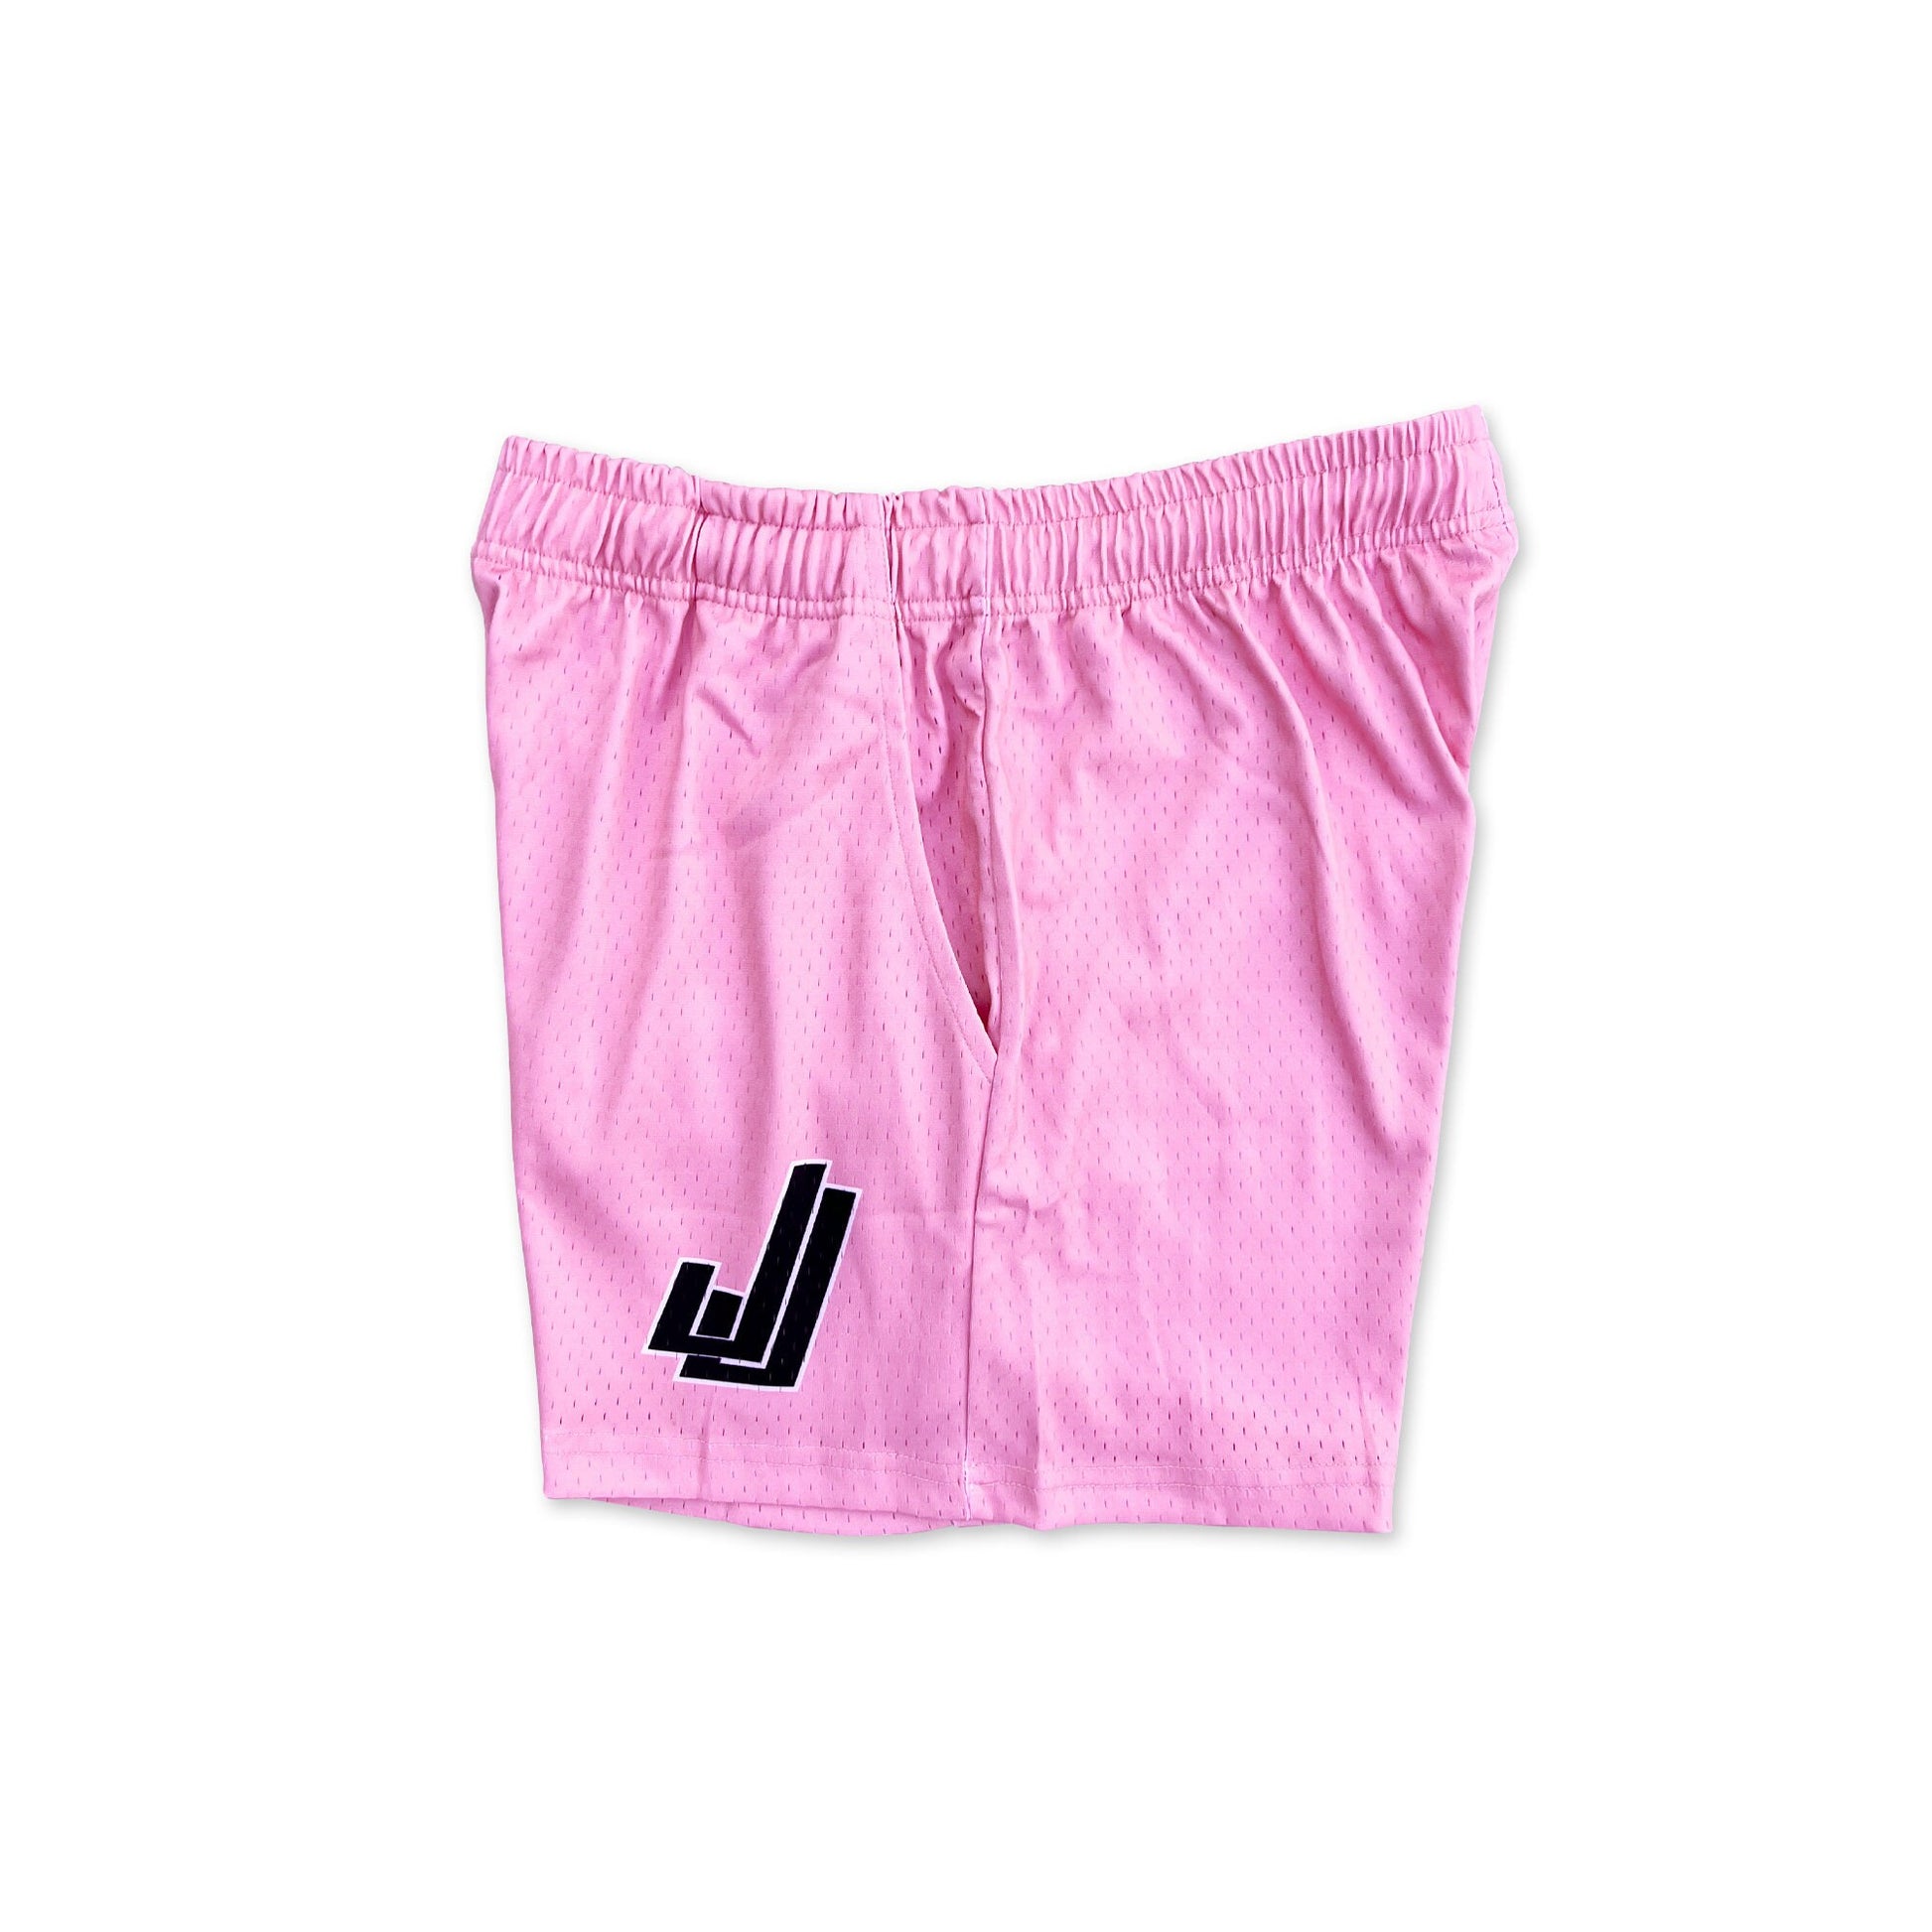 pink louis vuitton shorts , 5 in seam